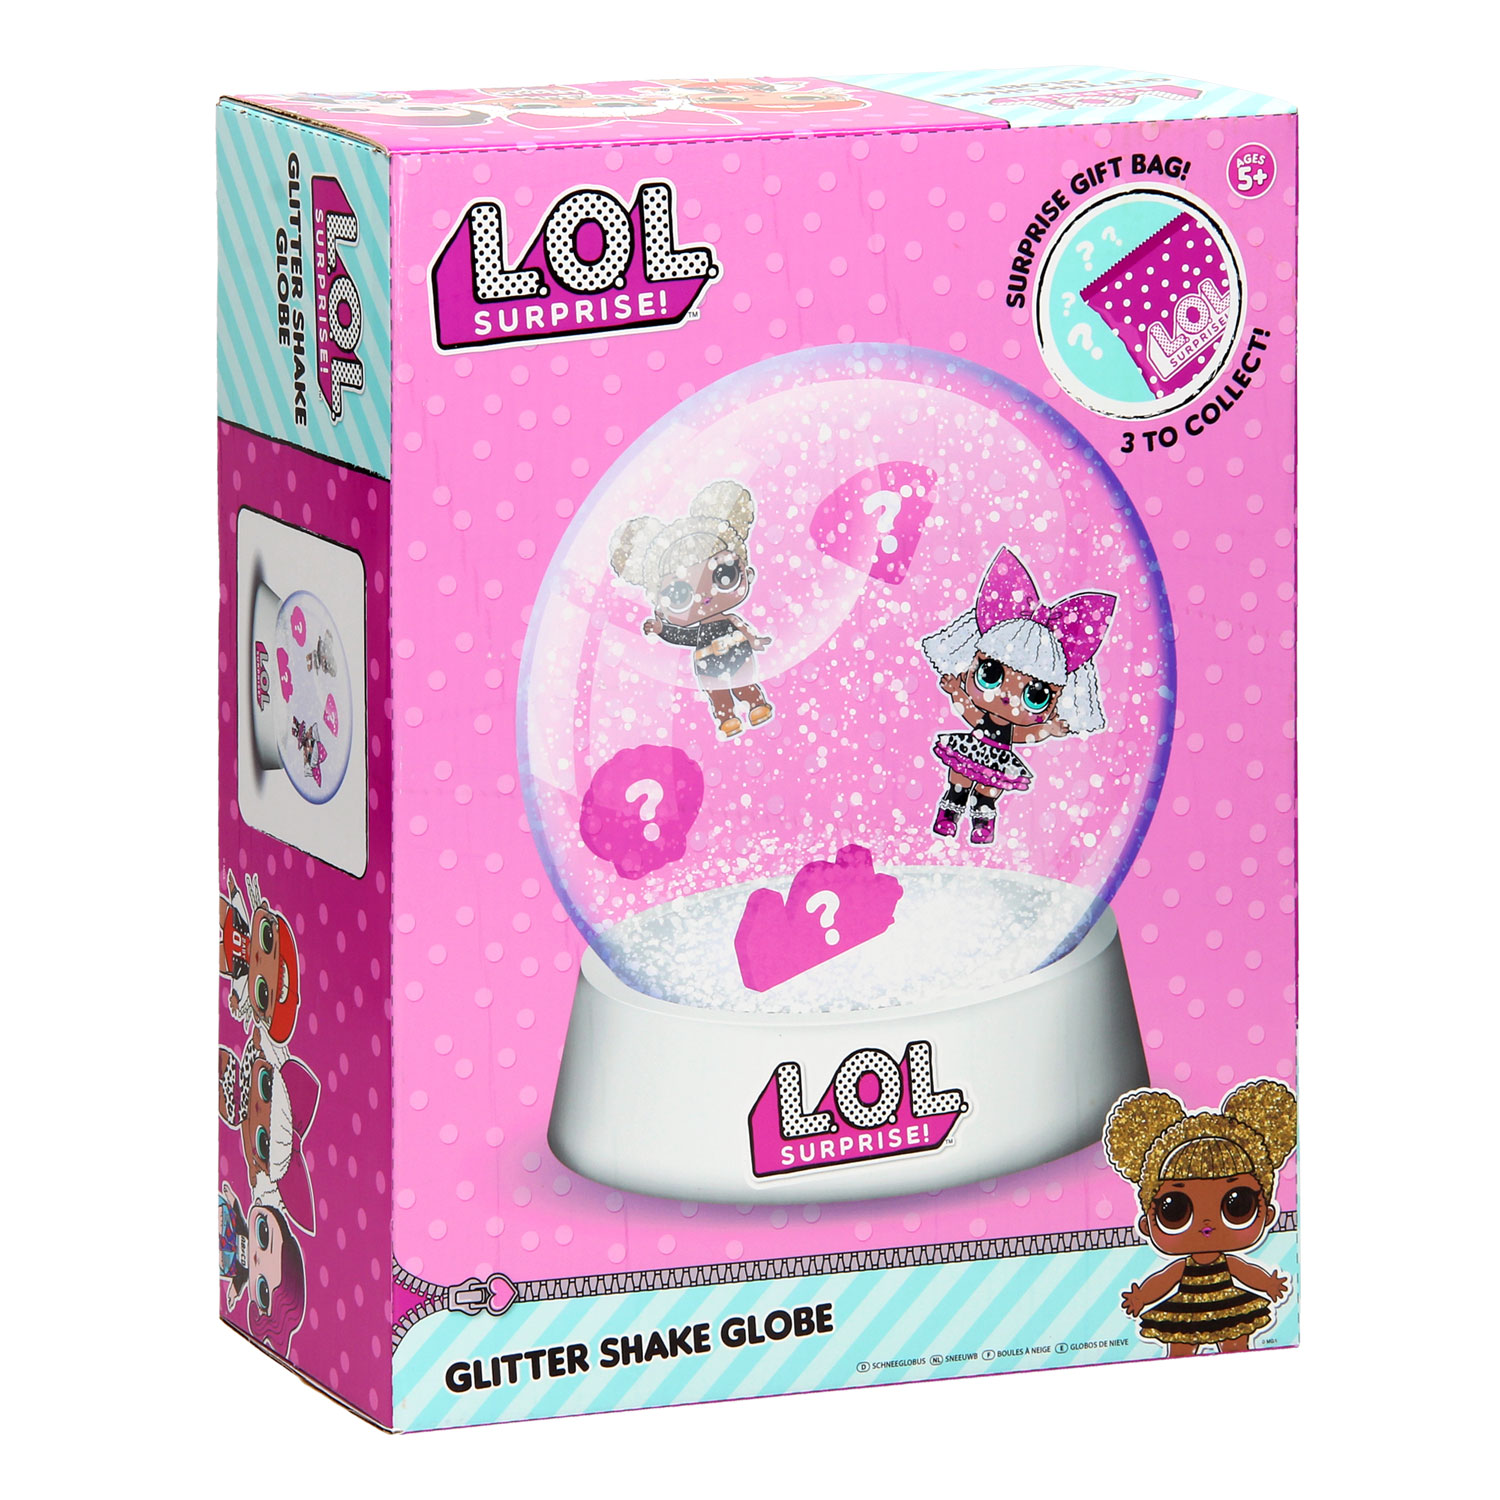 Alternatief voorstel Tegenstrijdigheid Geboorteplaats L.O.L. Surprise Glitter Schudbol | Thimble Toys